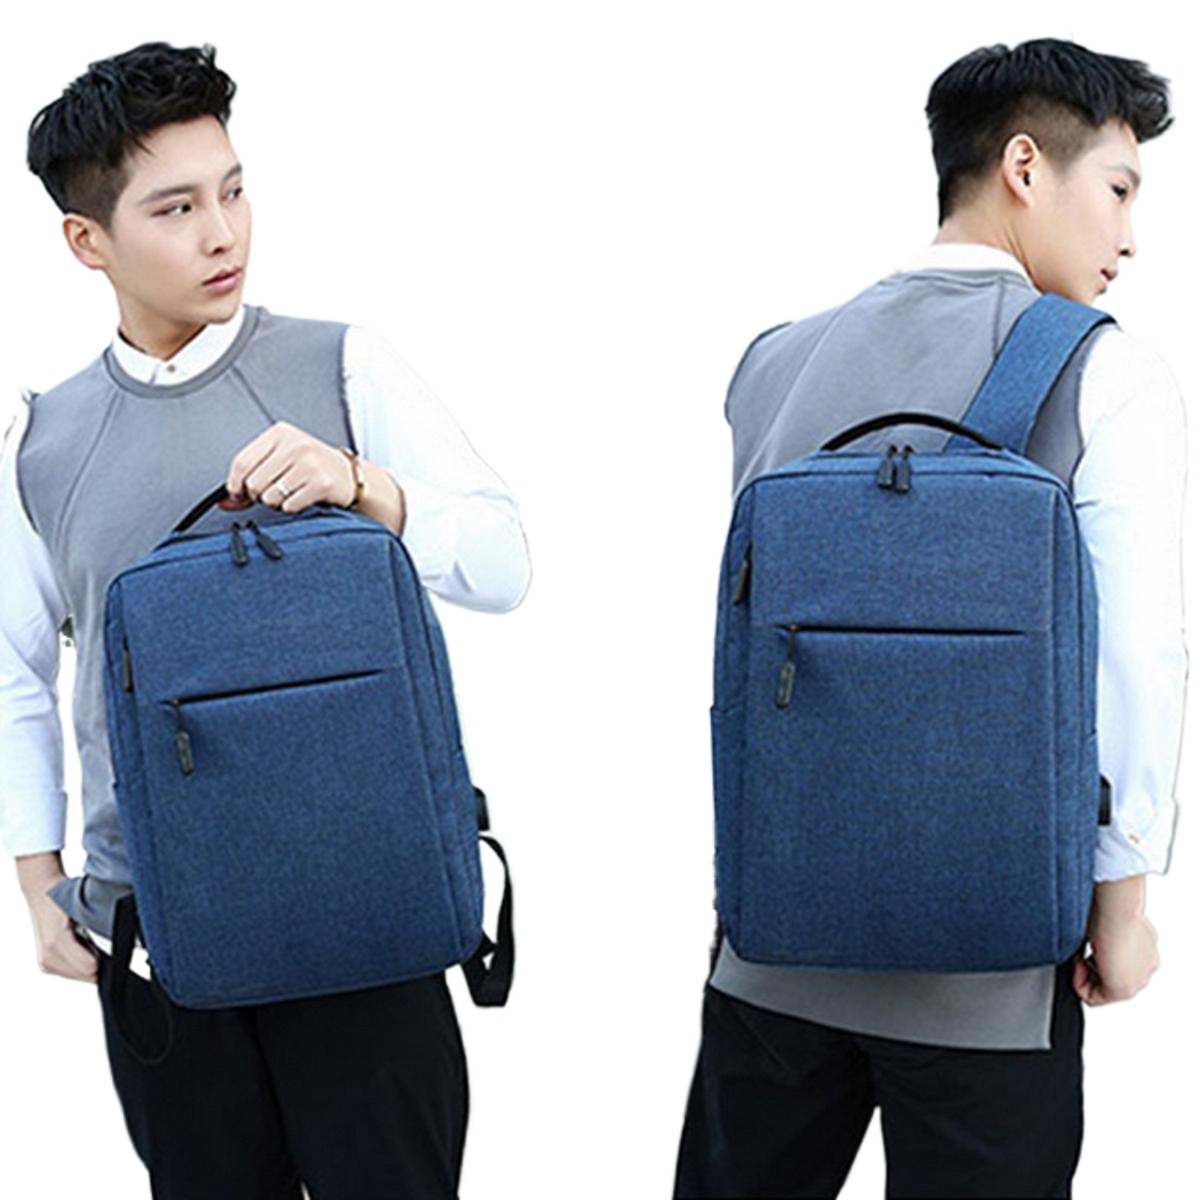 Men's Laptop Backpack Fashion Shoulder & Hand Bags For Boys Travelling  Bag's With USB Port School College Backpack, University Bags For Boys Men's.